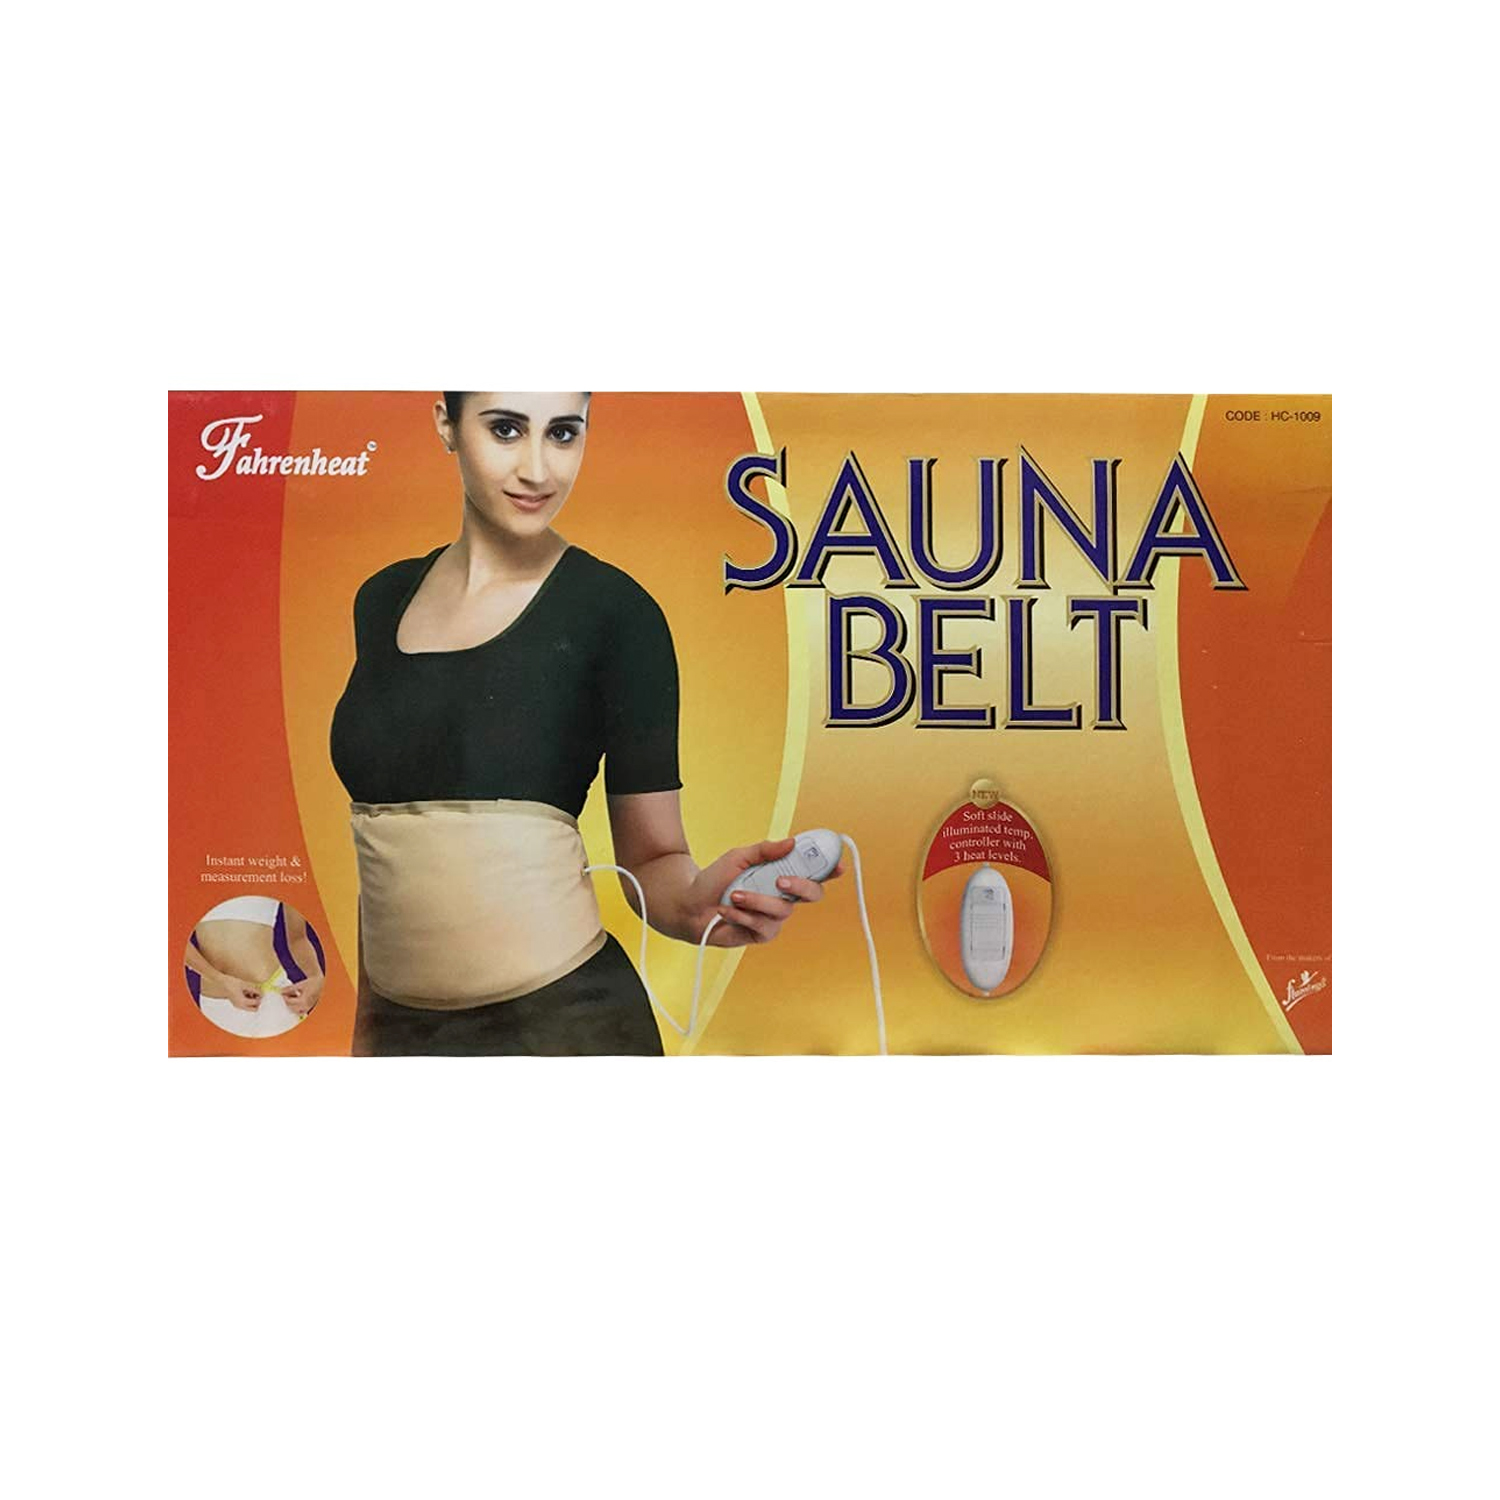 Flamingo Fahrenheat Sauna belt ₹1599 best pricerom cureka